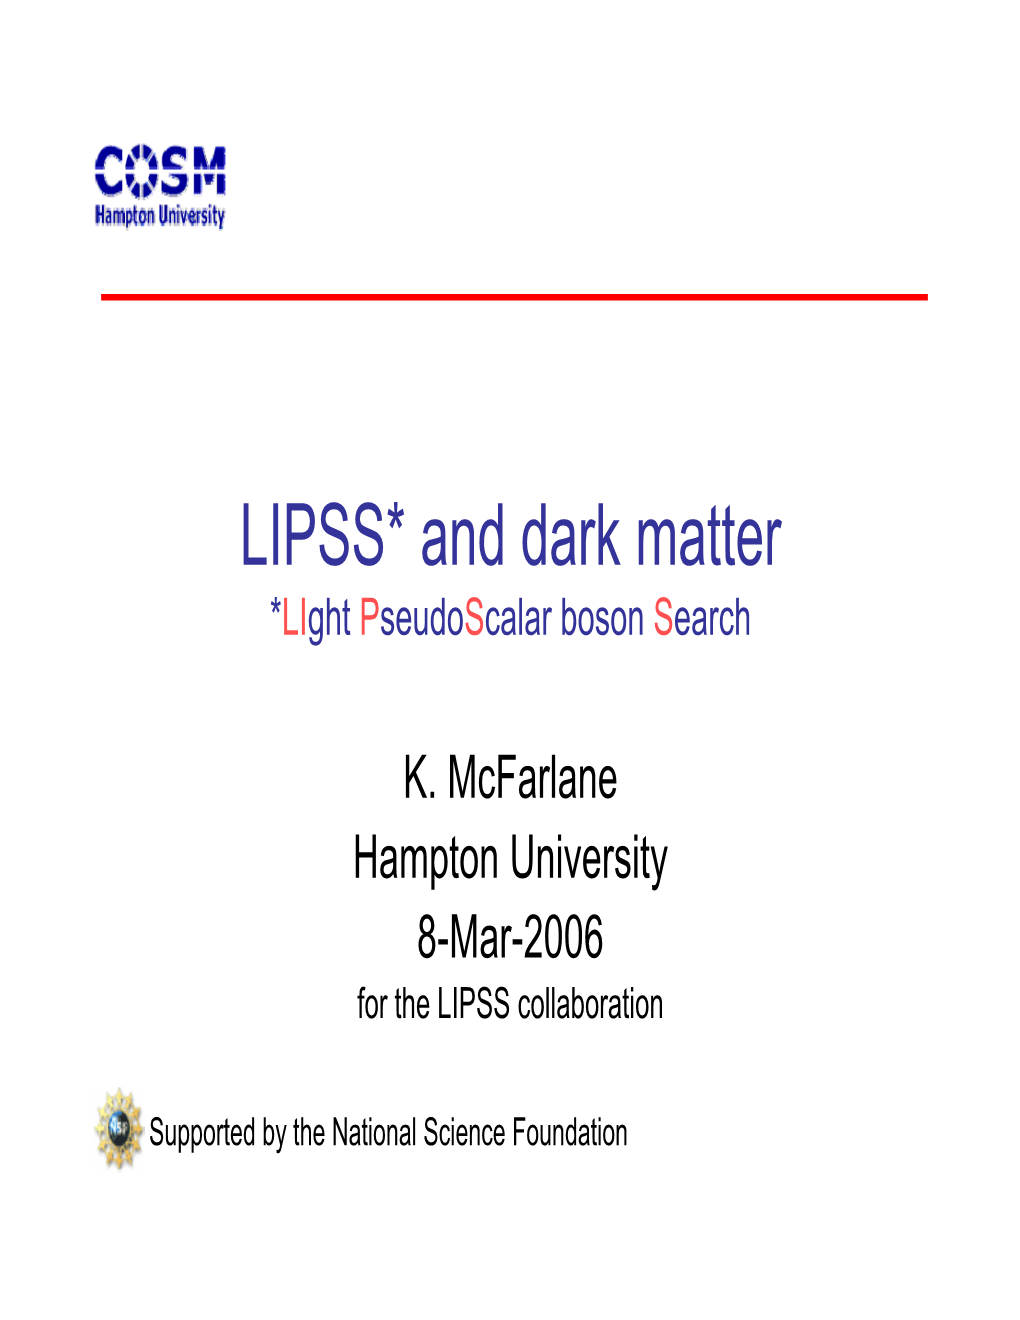 LIPSS* and Dark Matter *Light Pseudoscalar Boson Search